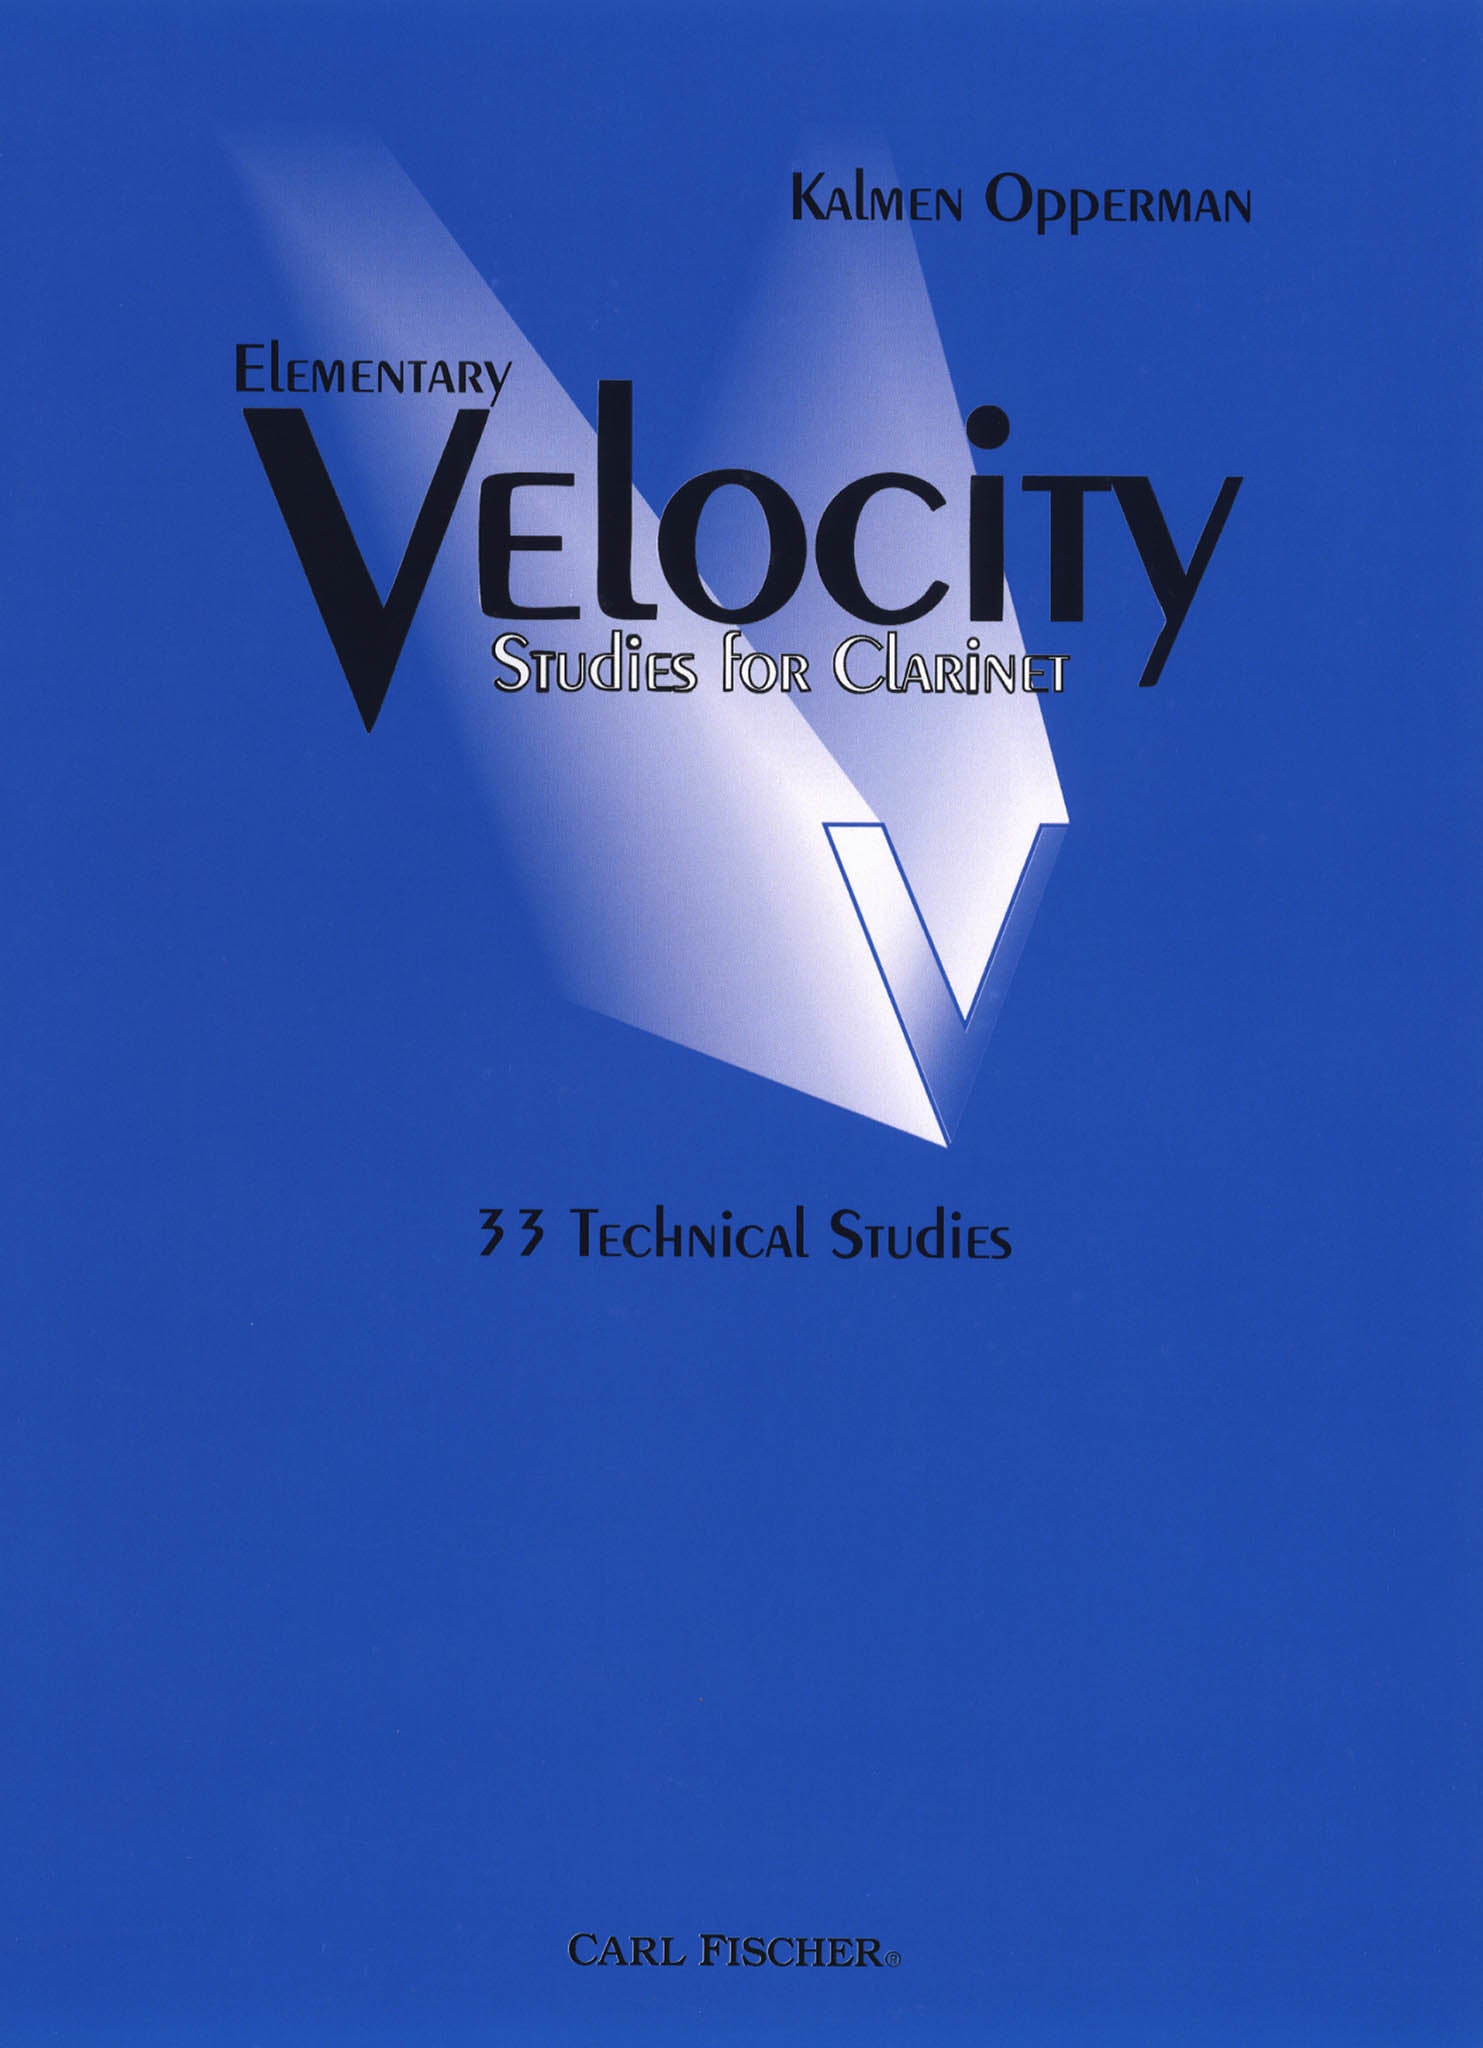 Elementary Velocity Studies for Clarinet Cover